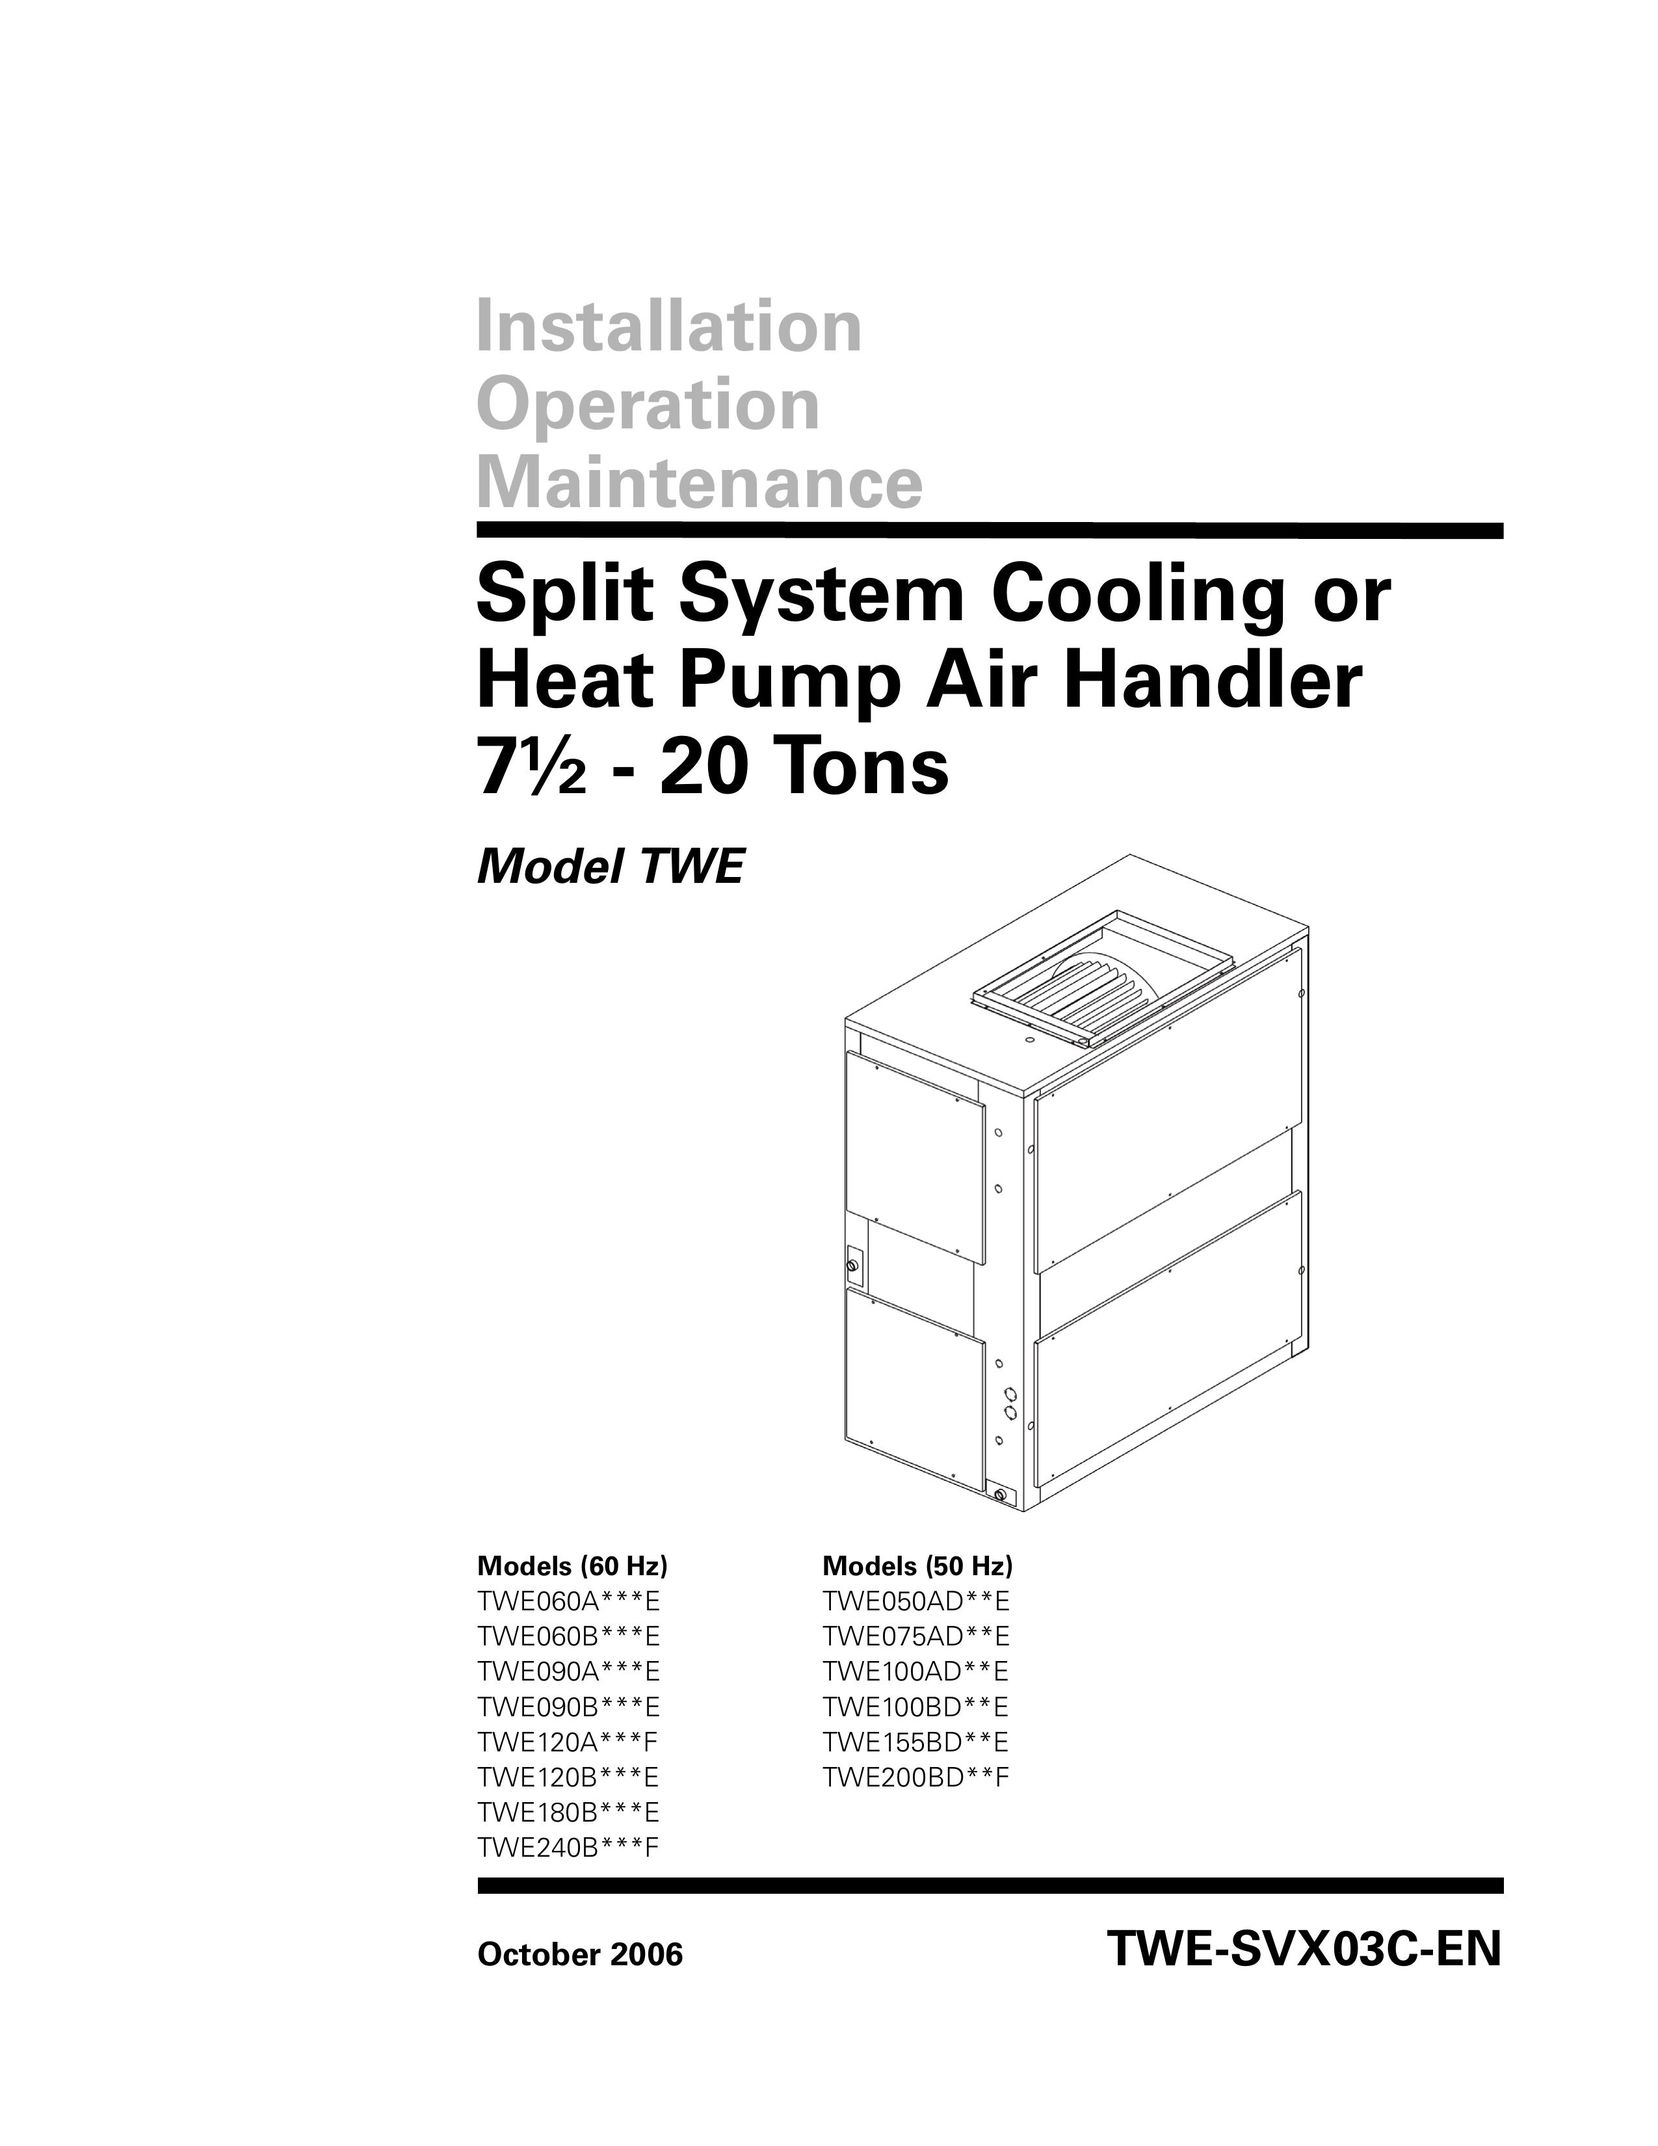 American Standard Split System Cooling or Heat Pump Air Handler Heat Pump User Manual